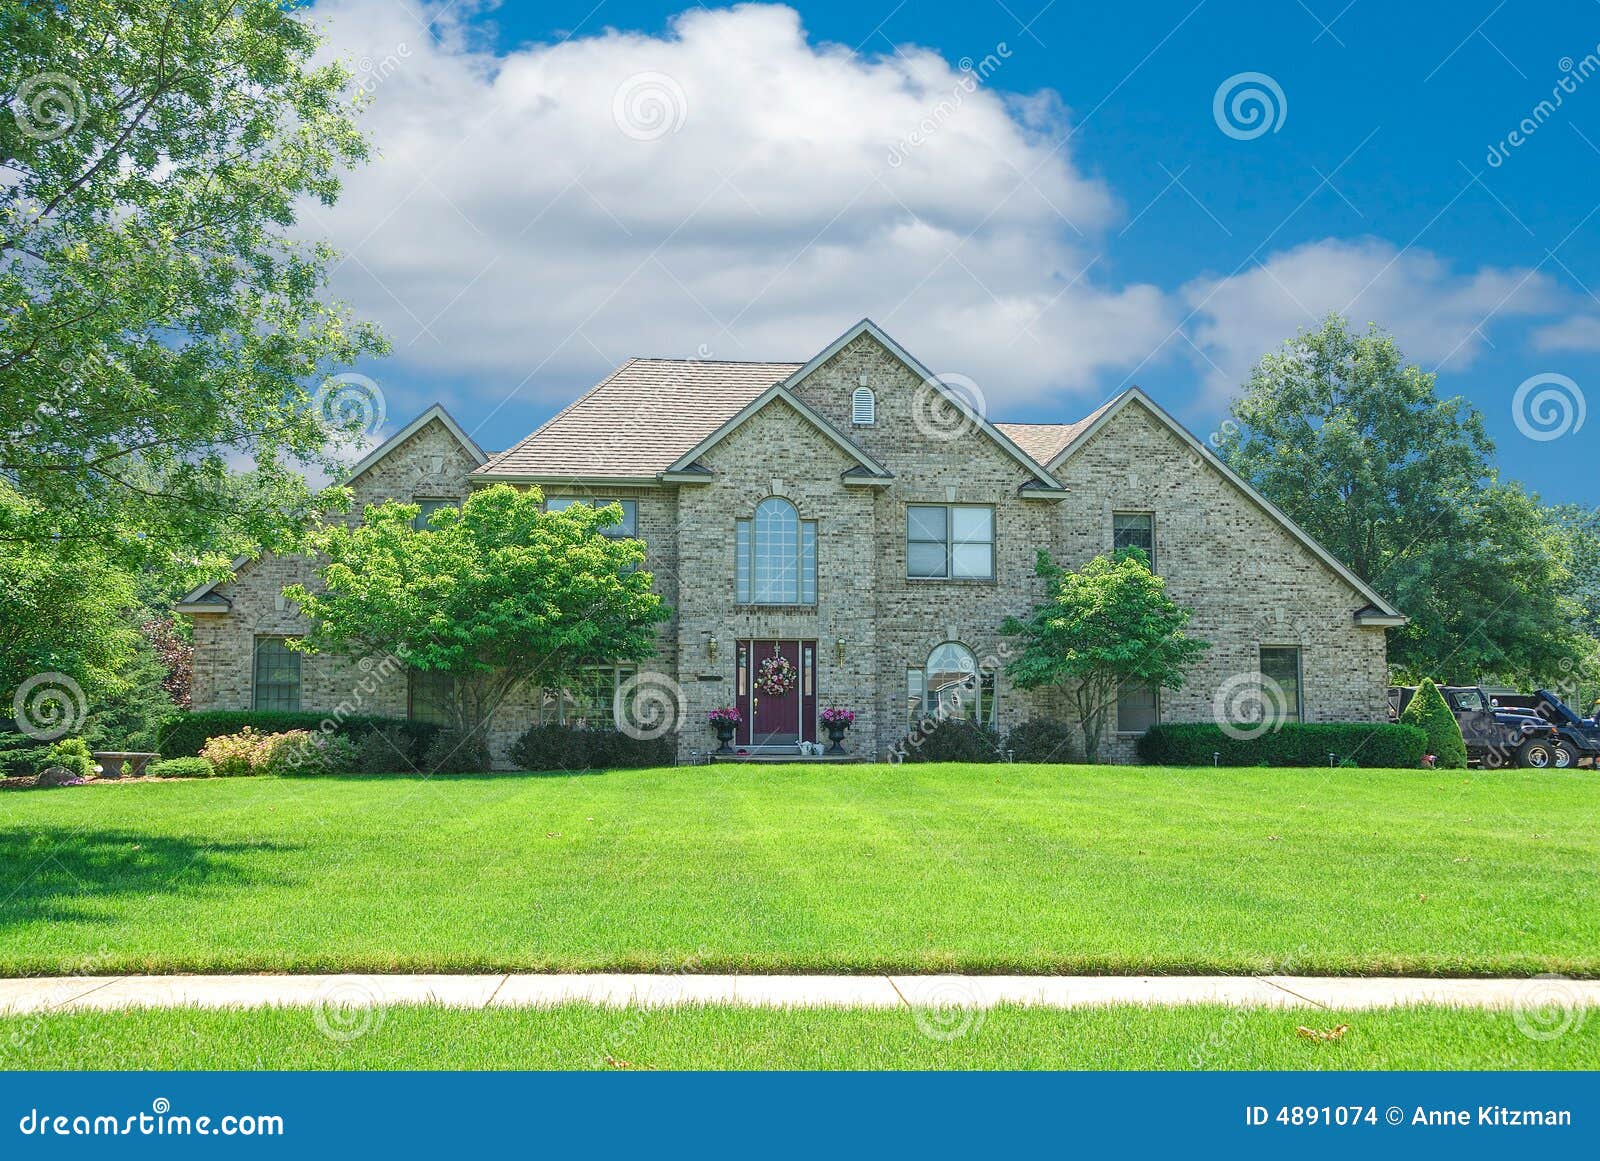 Brick Suburban Home Stock Photo Image Of Landscaping 4891074